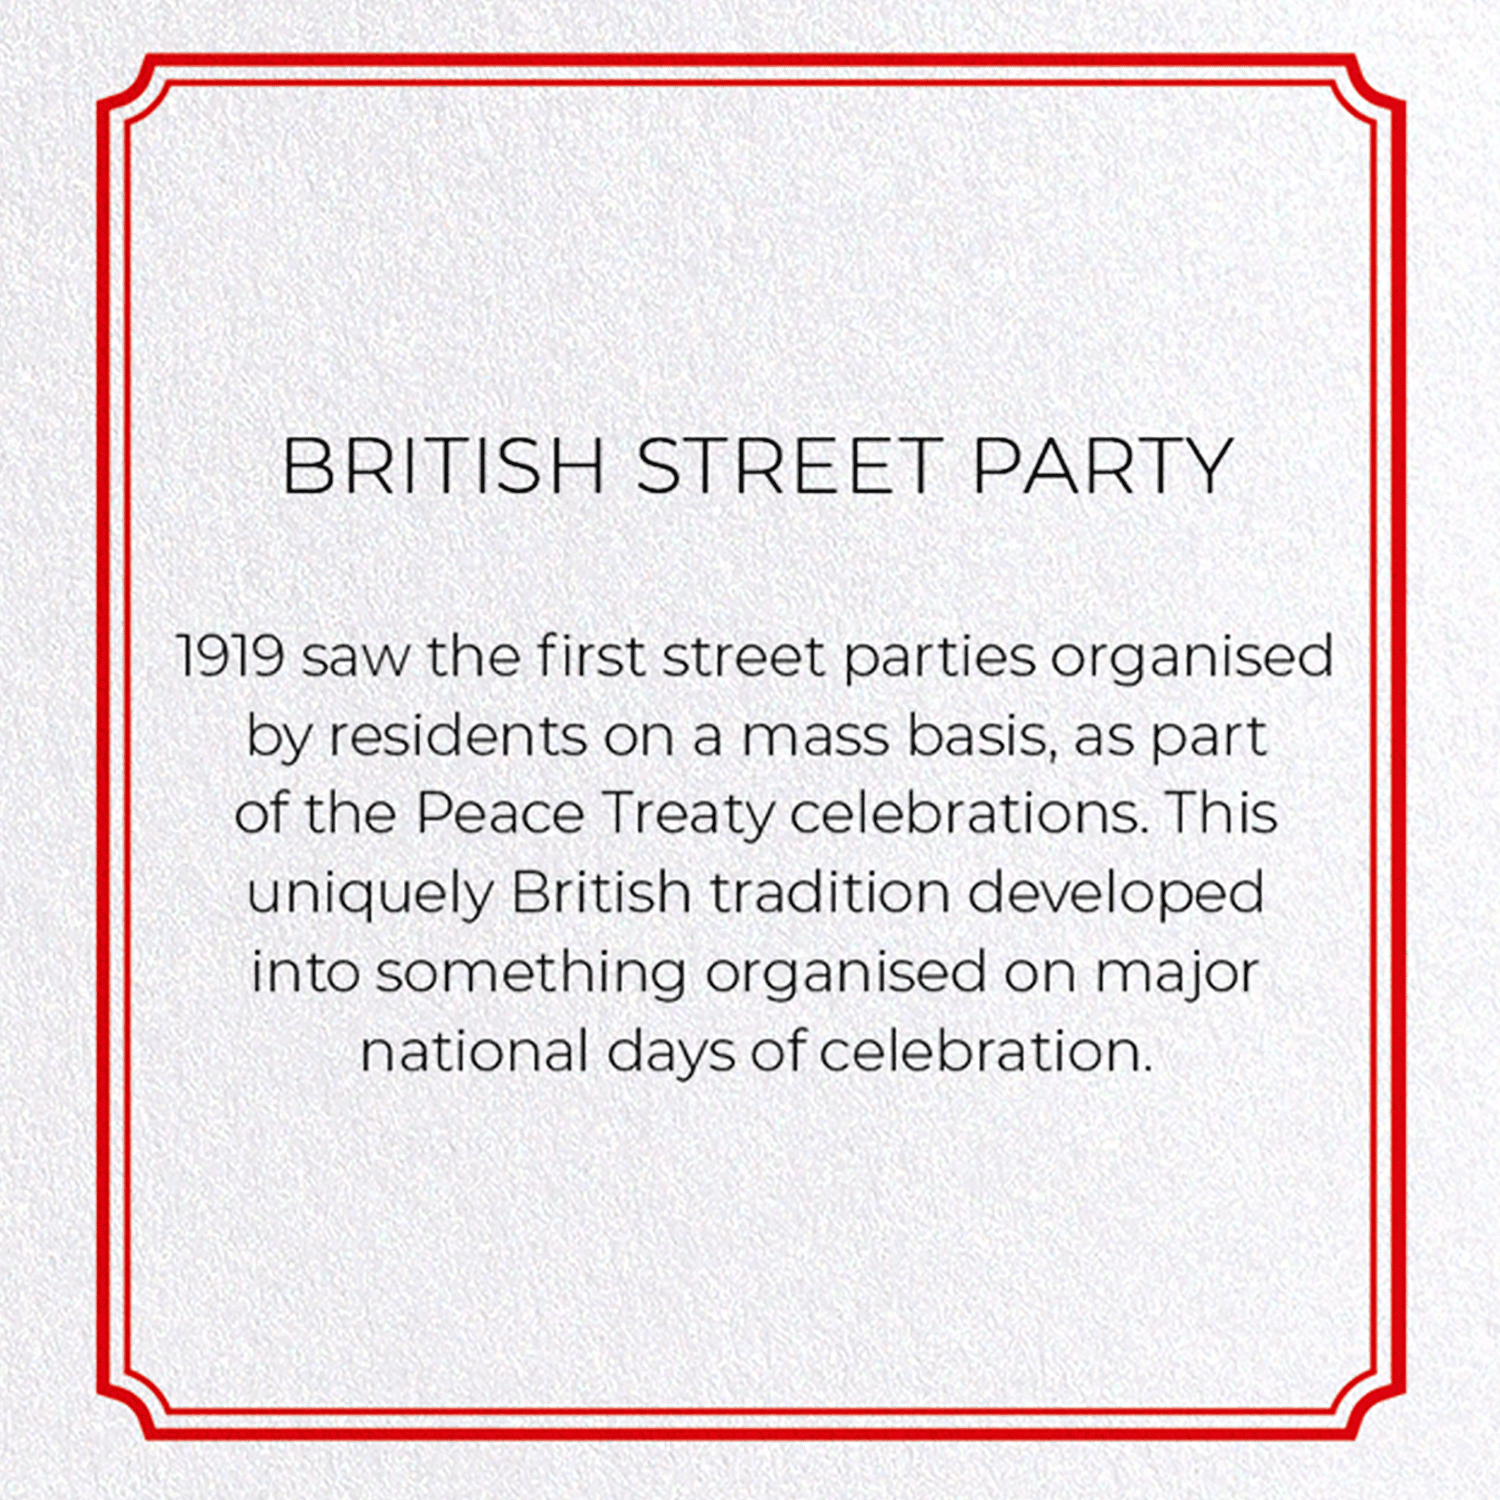 BRITISH STREET PARTY